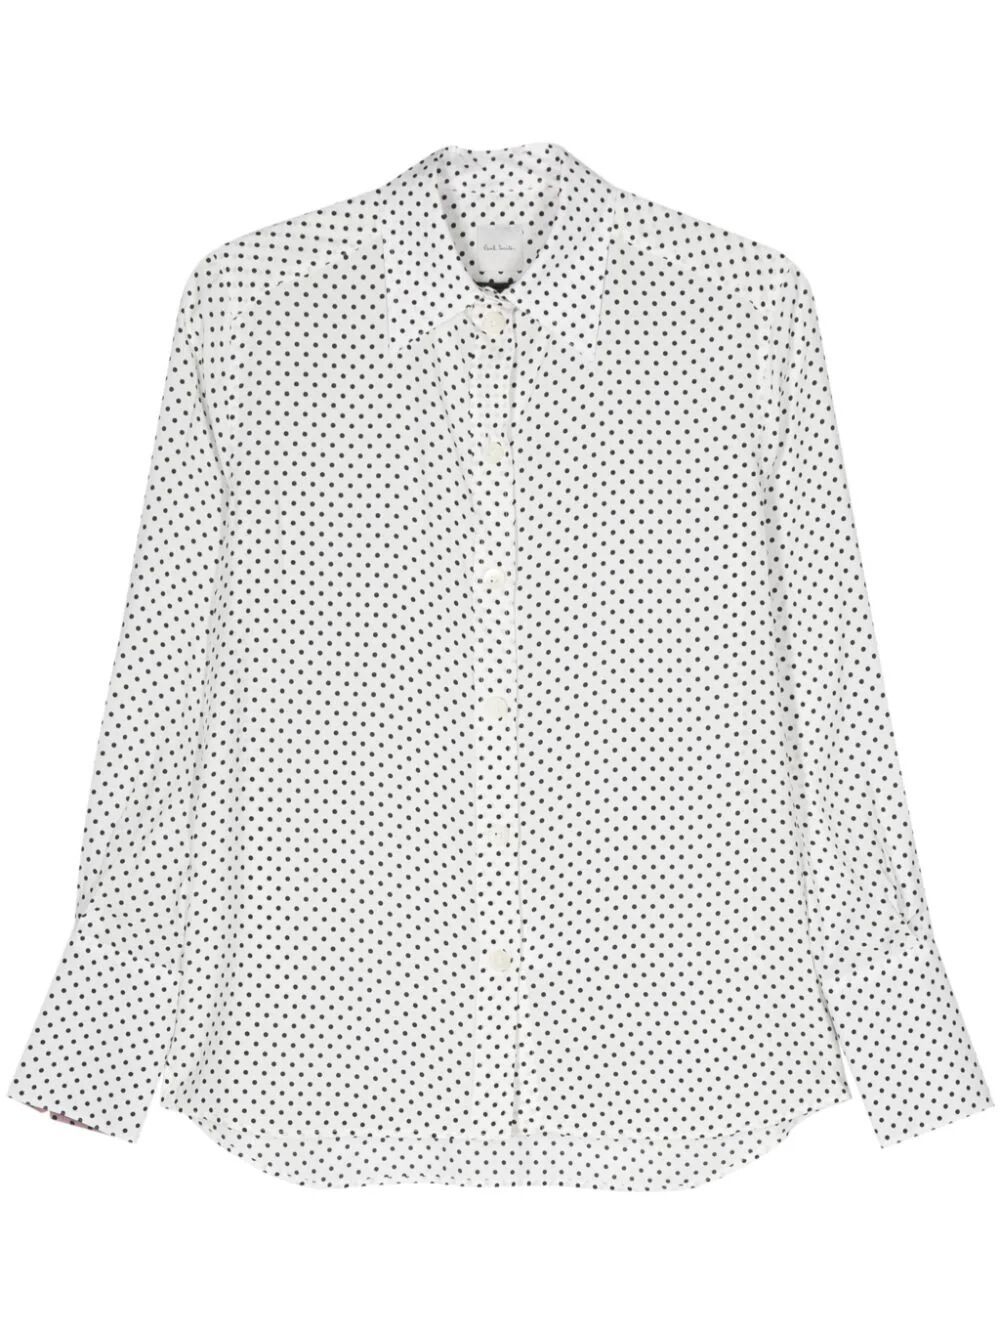 Paul Smith Polka Dot Shirt In White